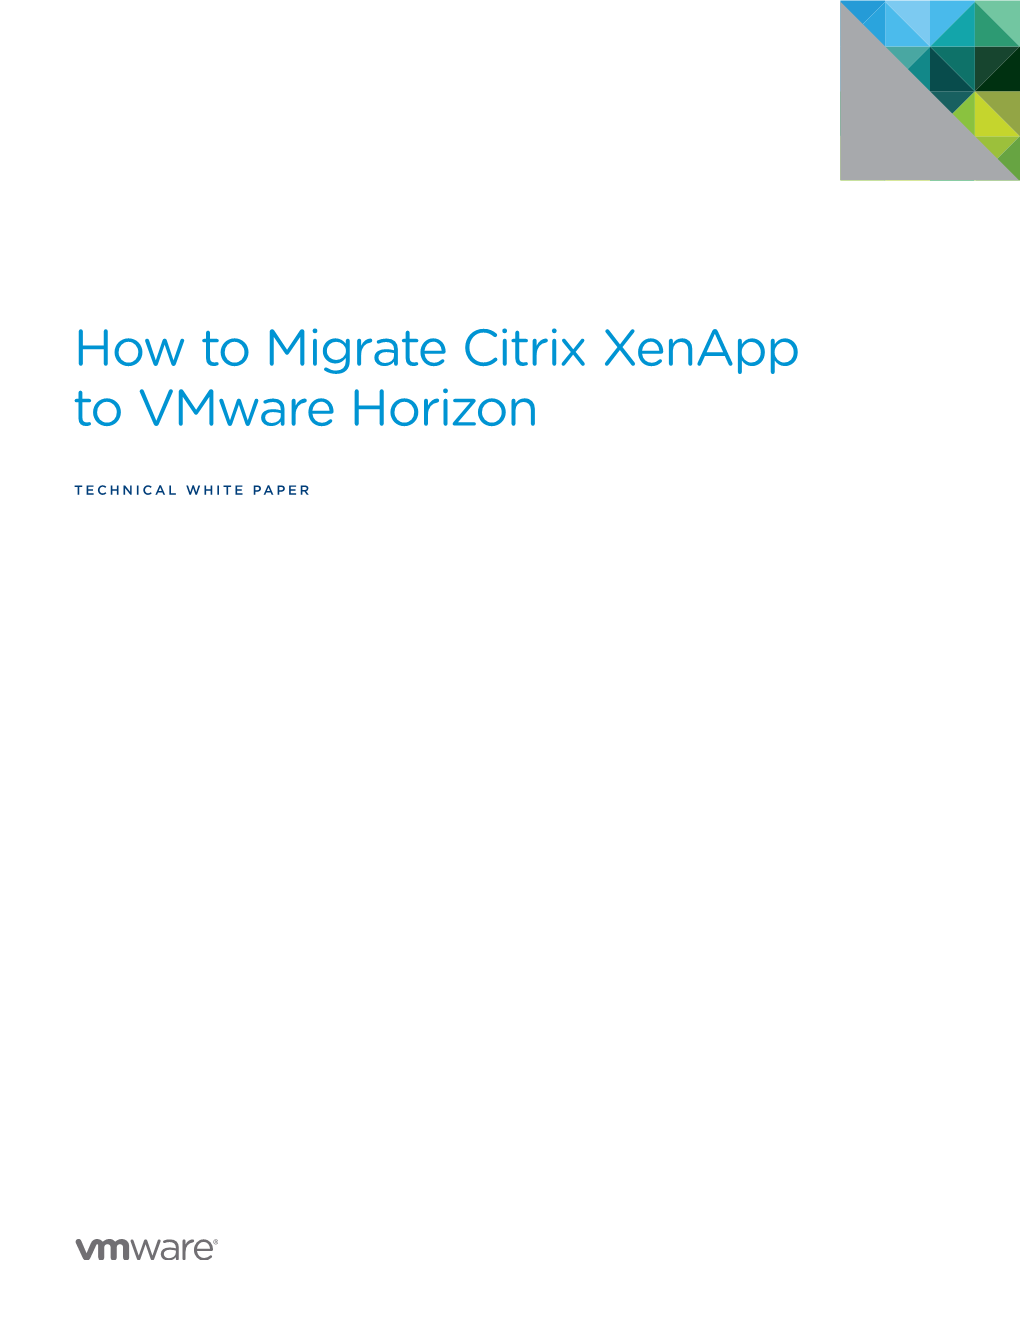 How to Migrate Citrix Xenapp to Vmware Horizon